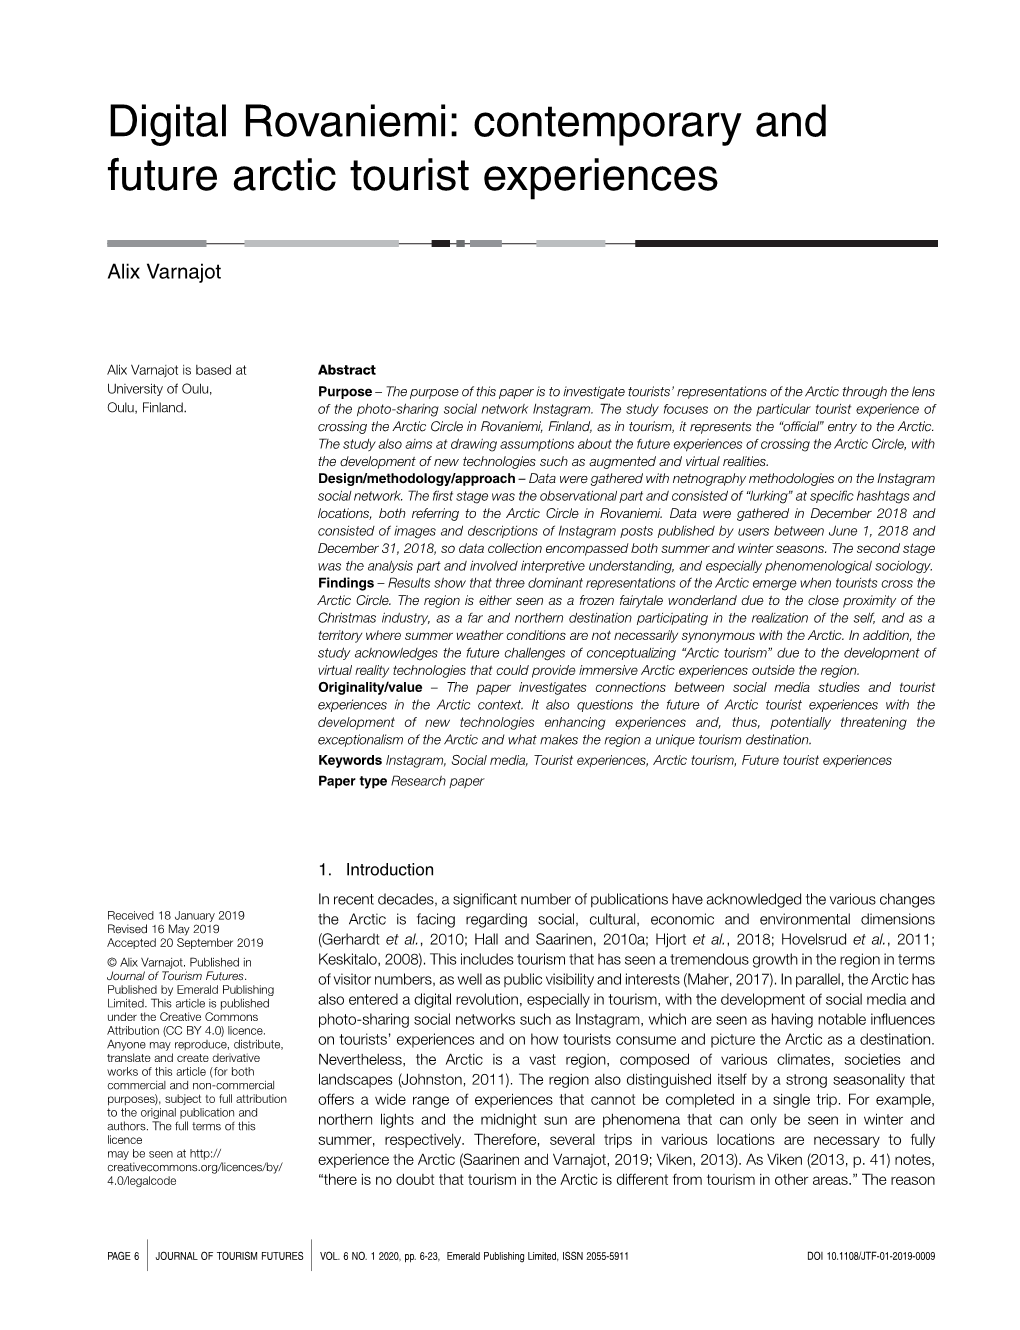 Digital Rovaniemi: Contemporary and Future Arctic Tourist Experiences